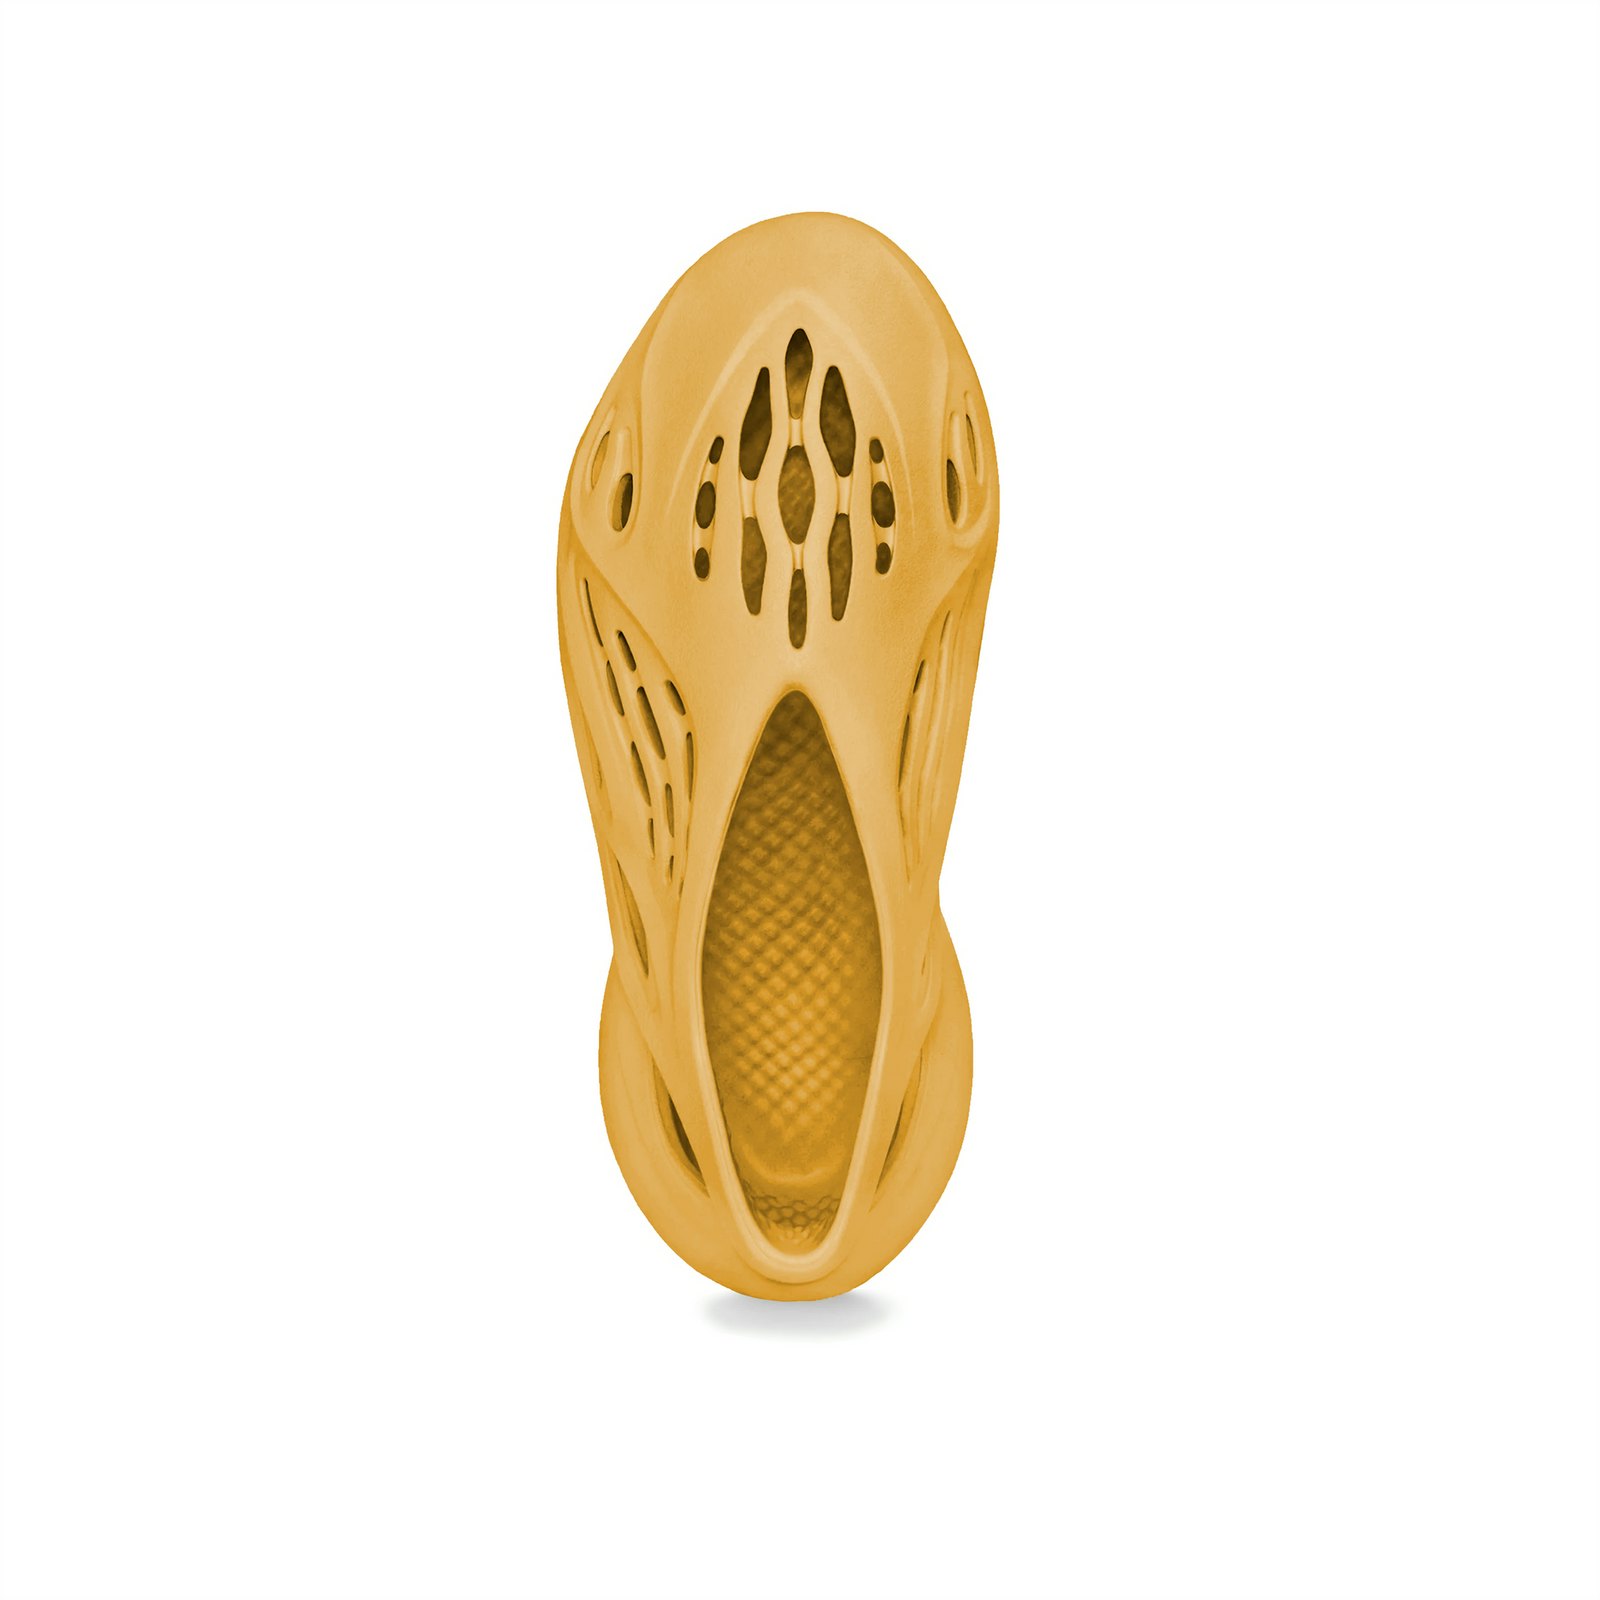 Kanye keeps it weird with the gold 'Ochre' Yeezy Foam runner shoe